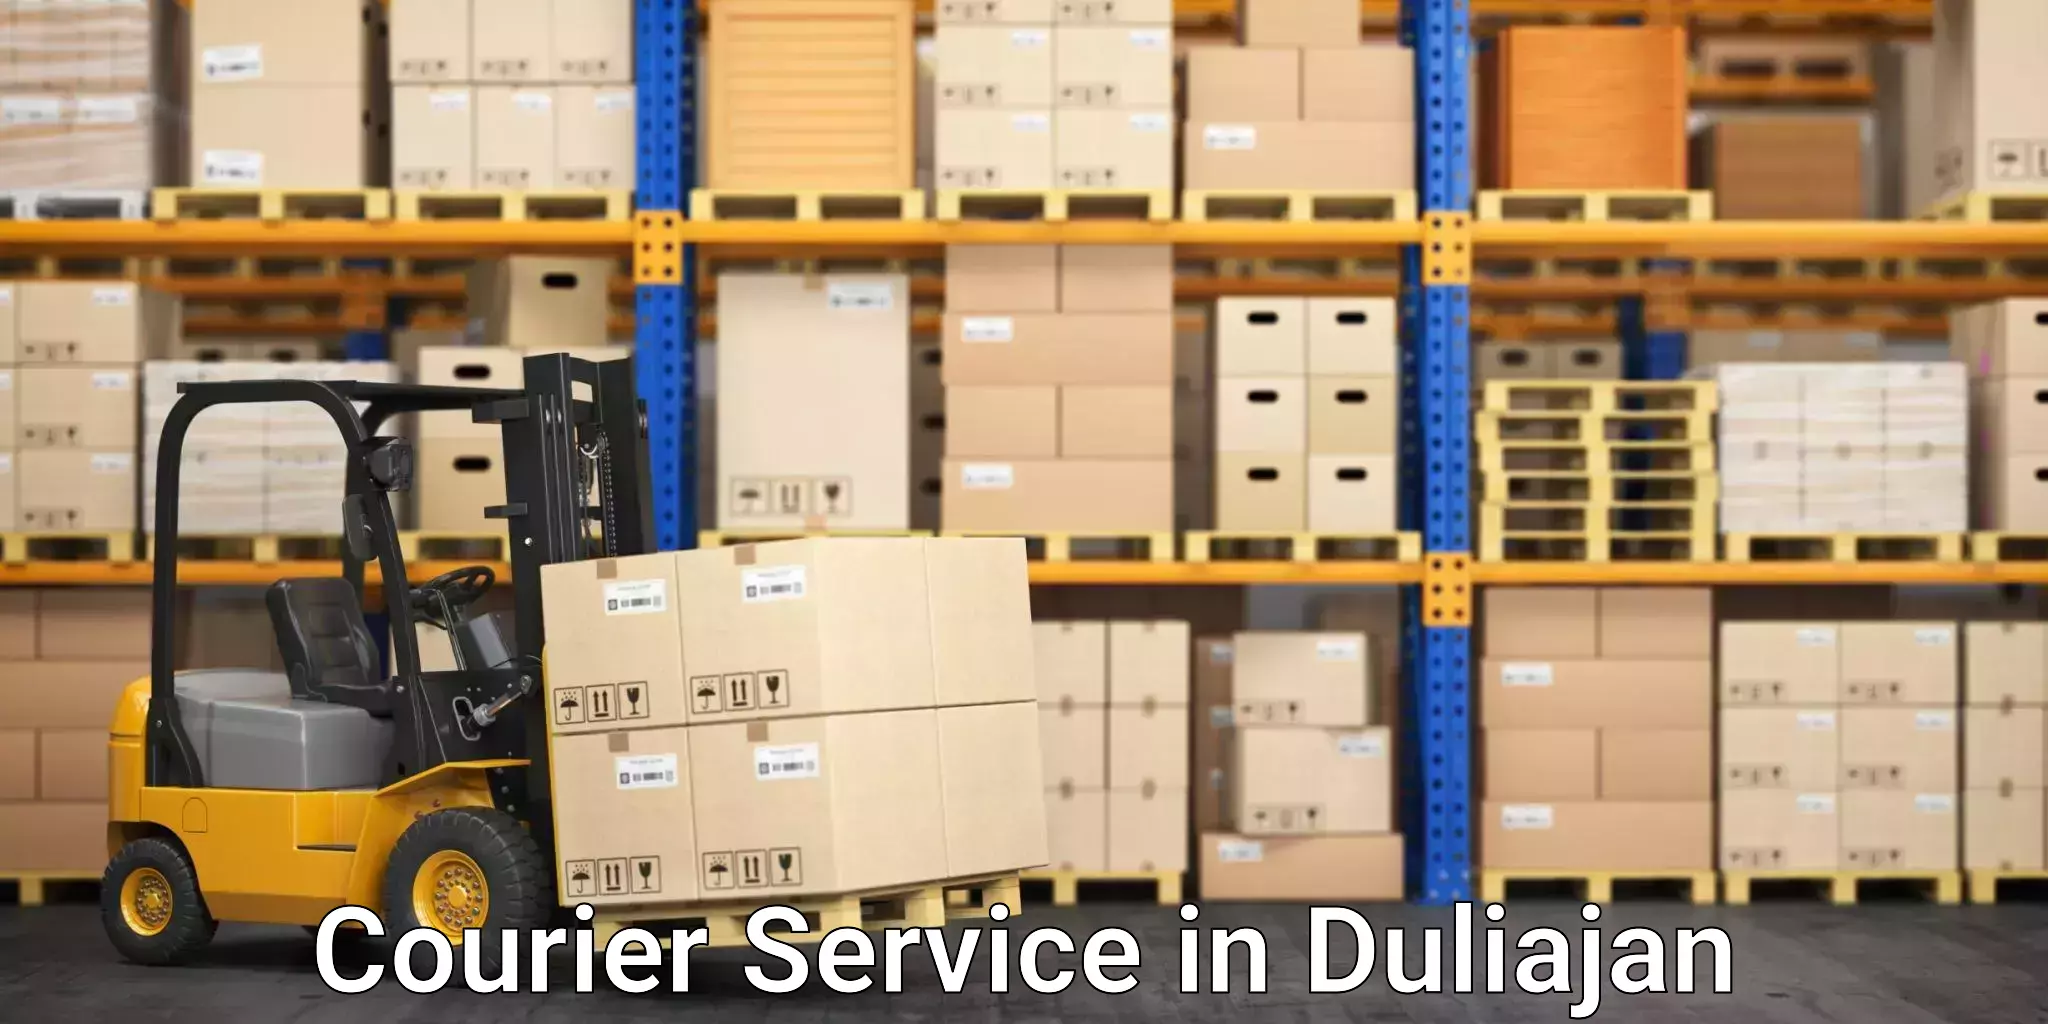 Secure package delivery in Duliajan